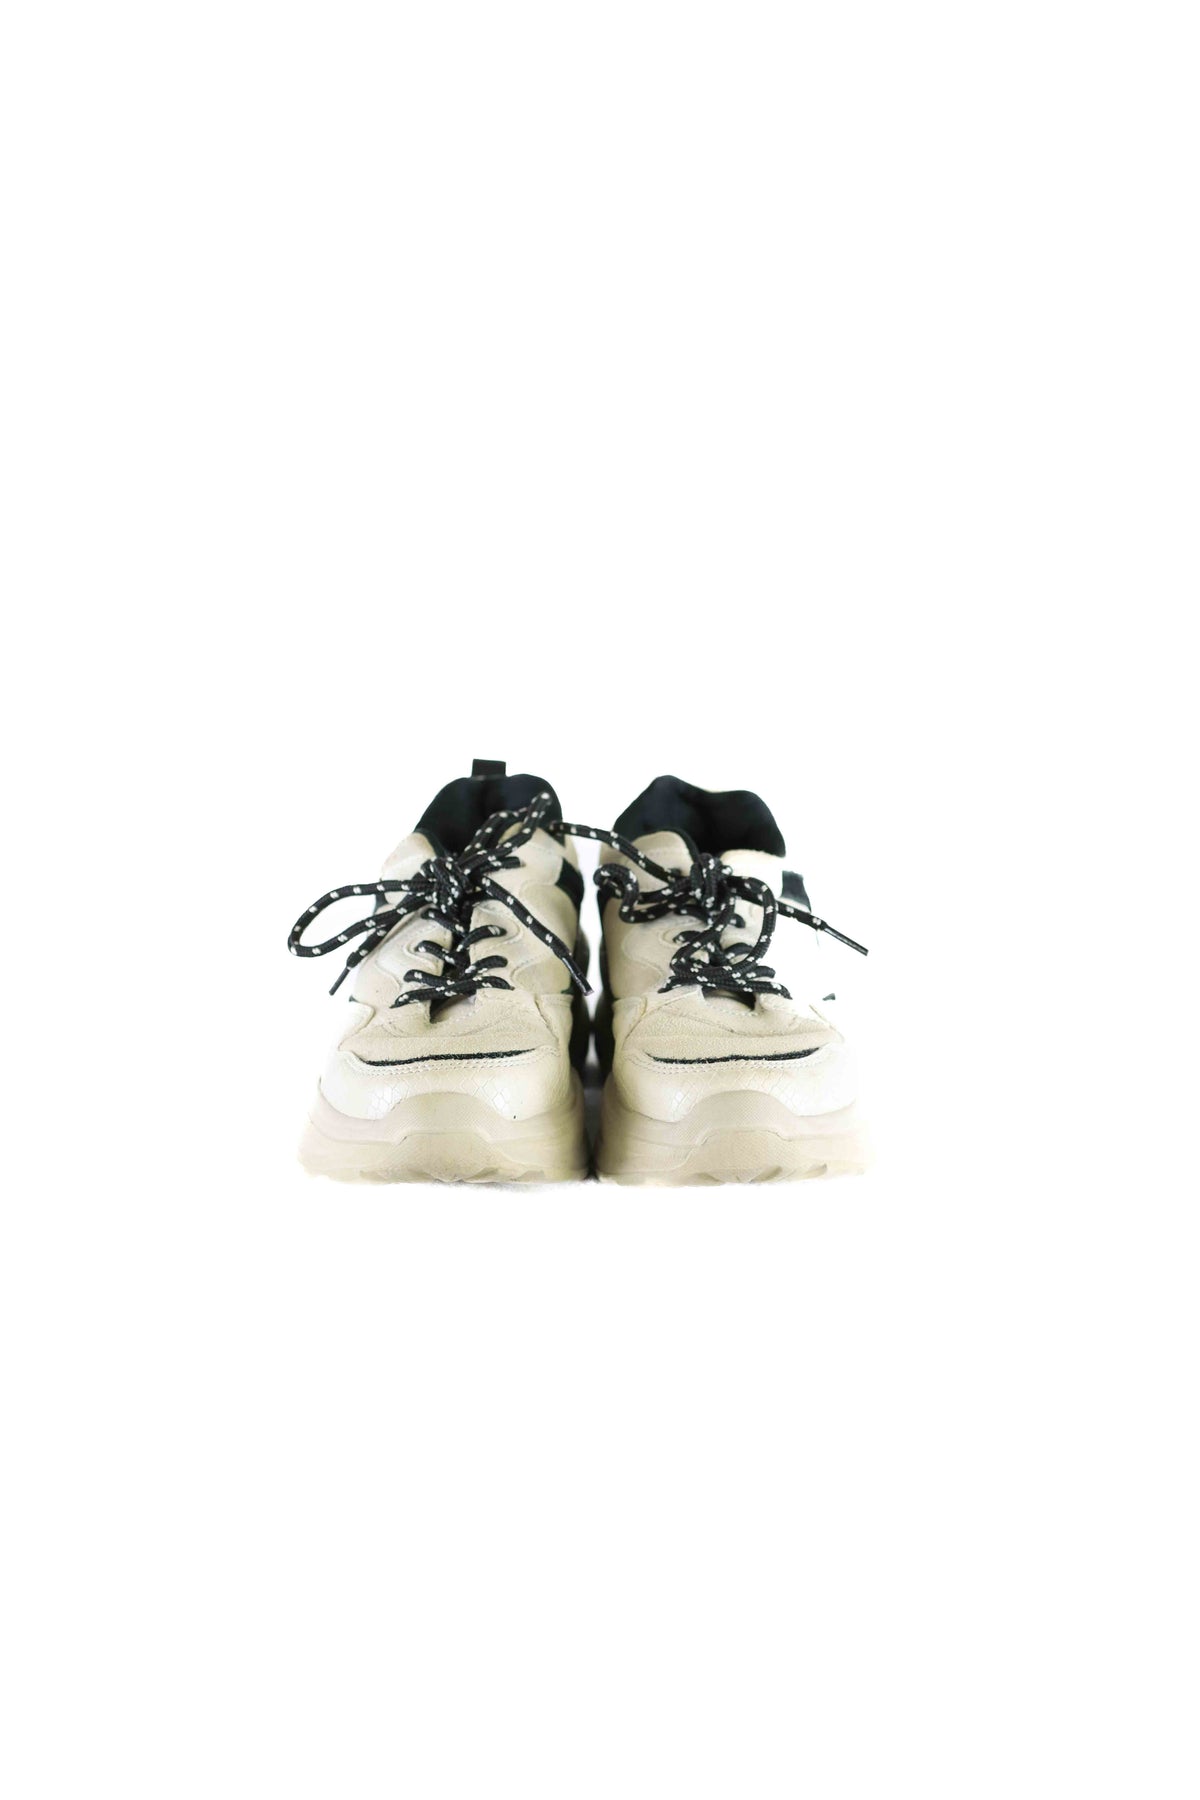 Wittner Cream and Black Sneakers AU/US 4.5 (EU 35)